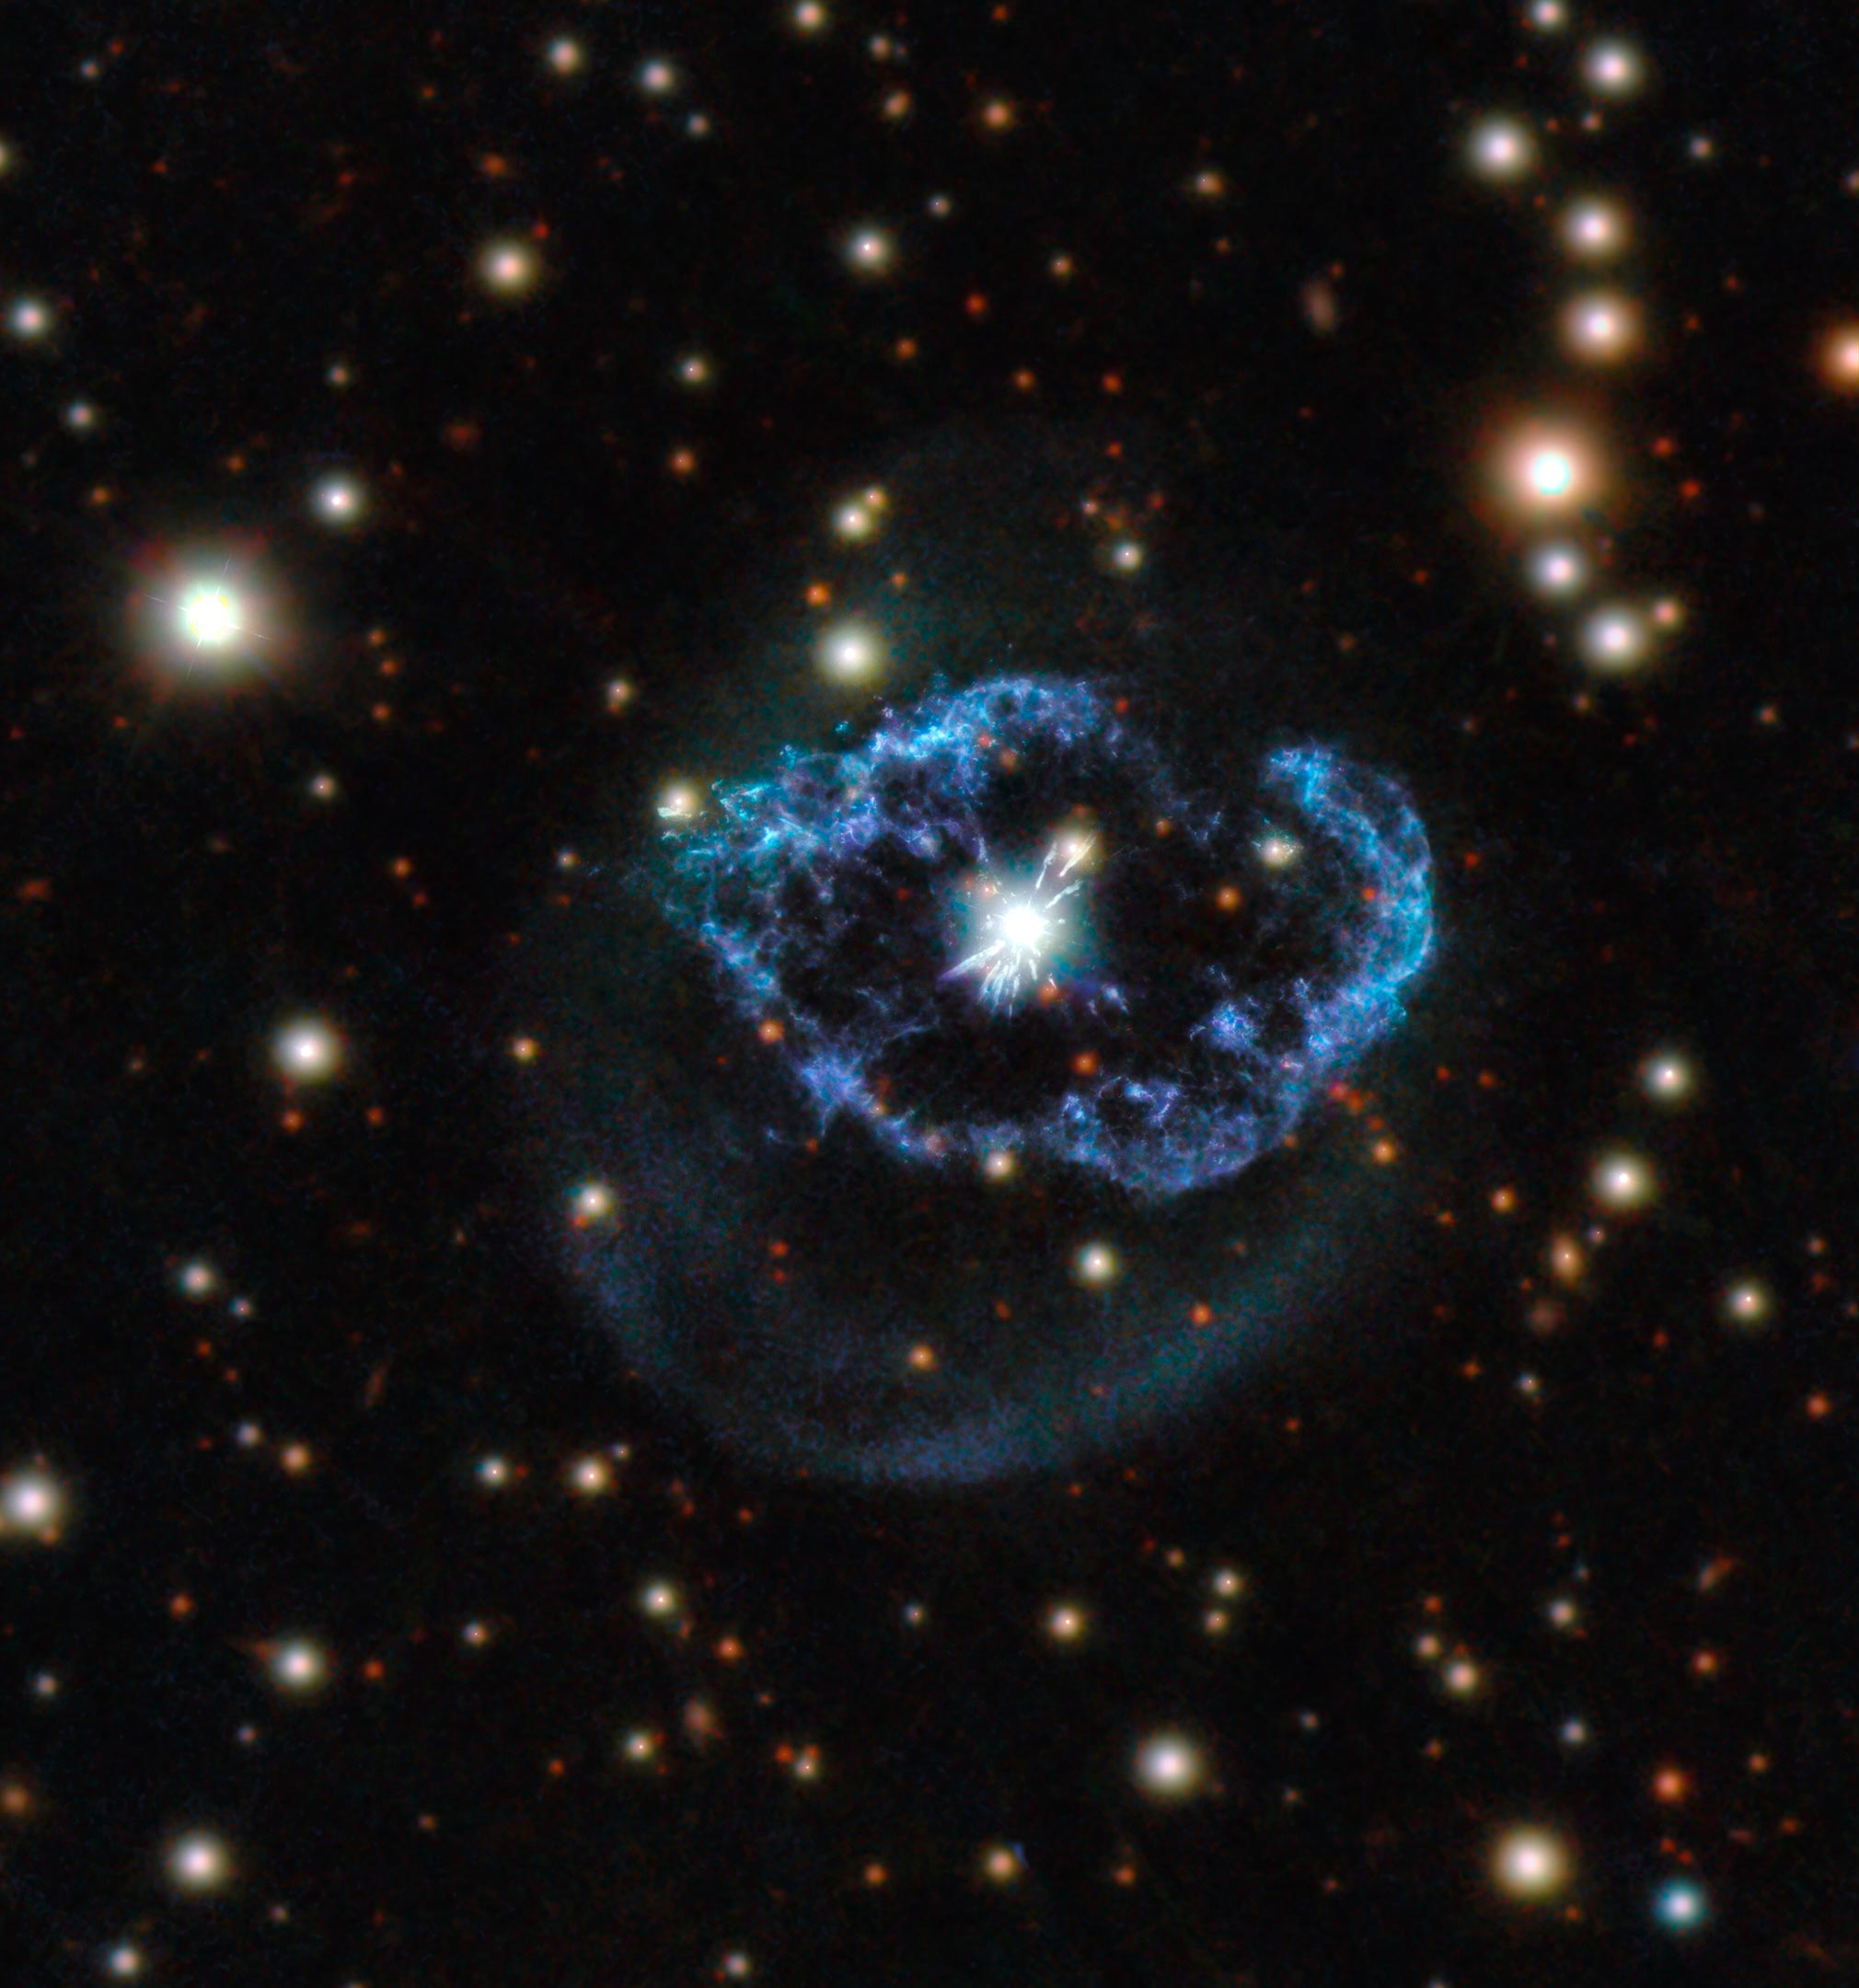 Hubble Spies an unusual planetary nebula